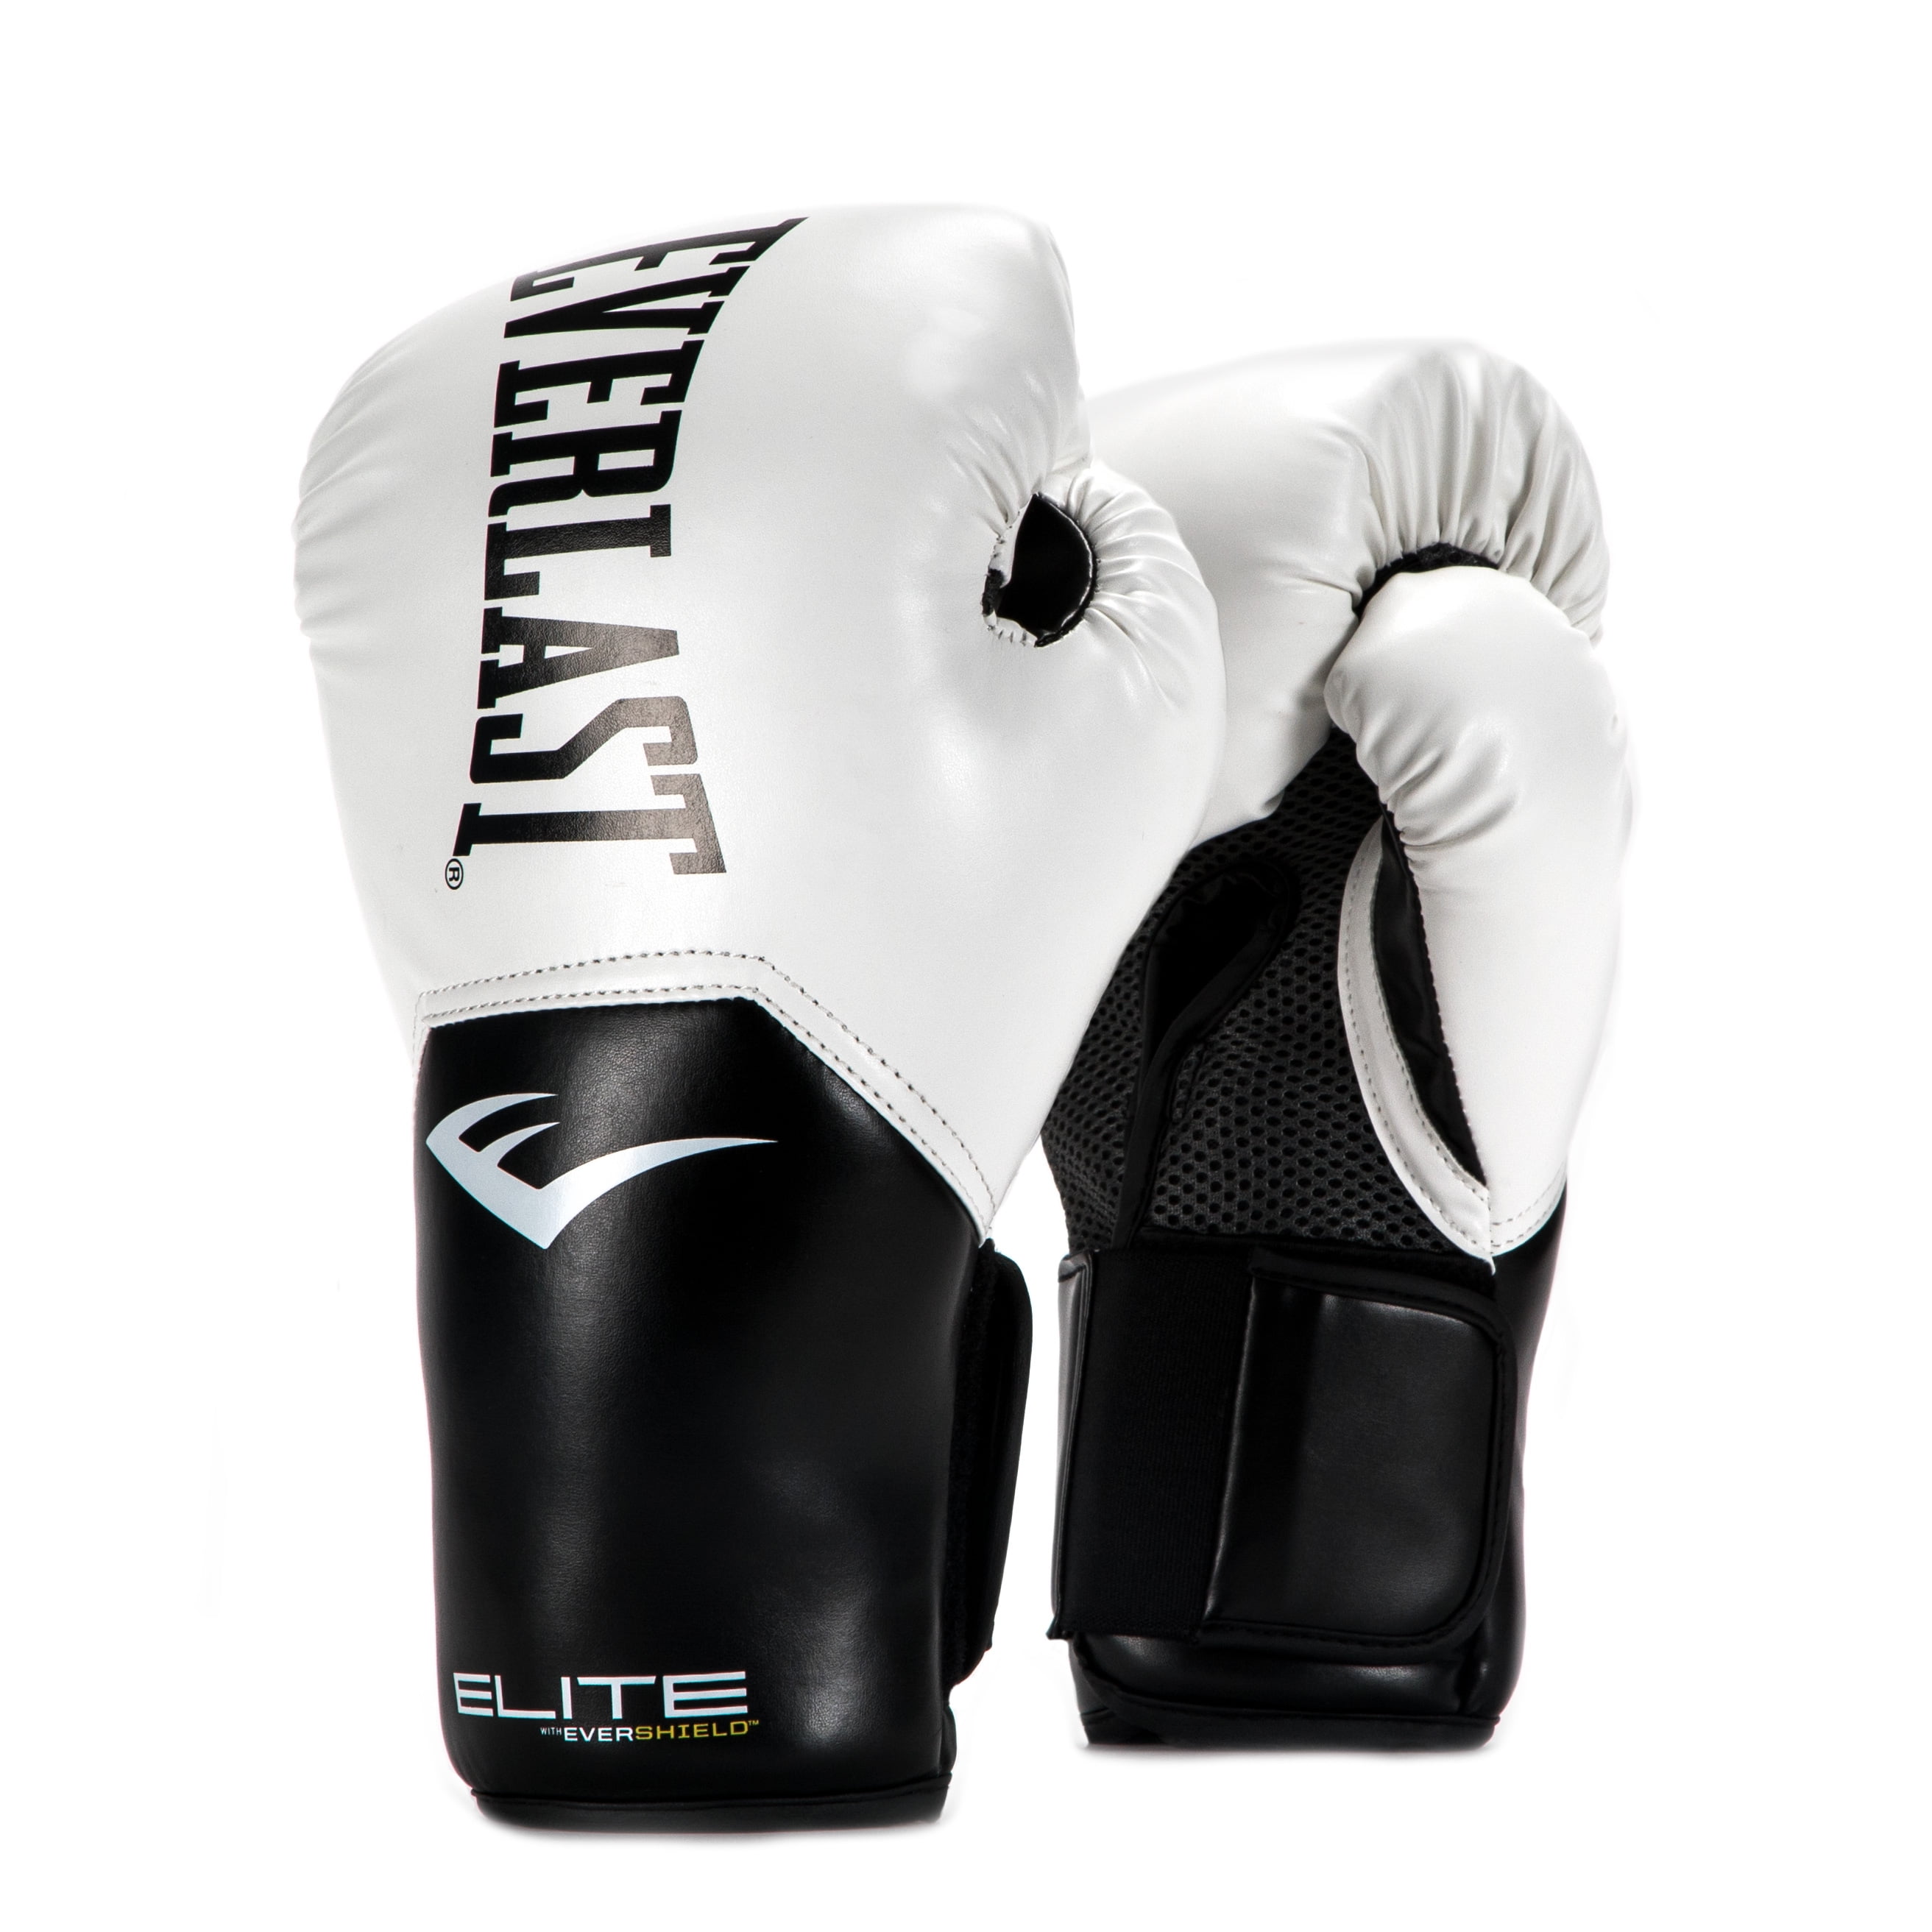 Black Everlast Elite Leather Training Boxing Gloves Size 12 Ounces 